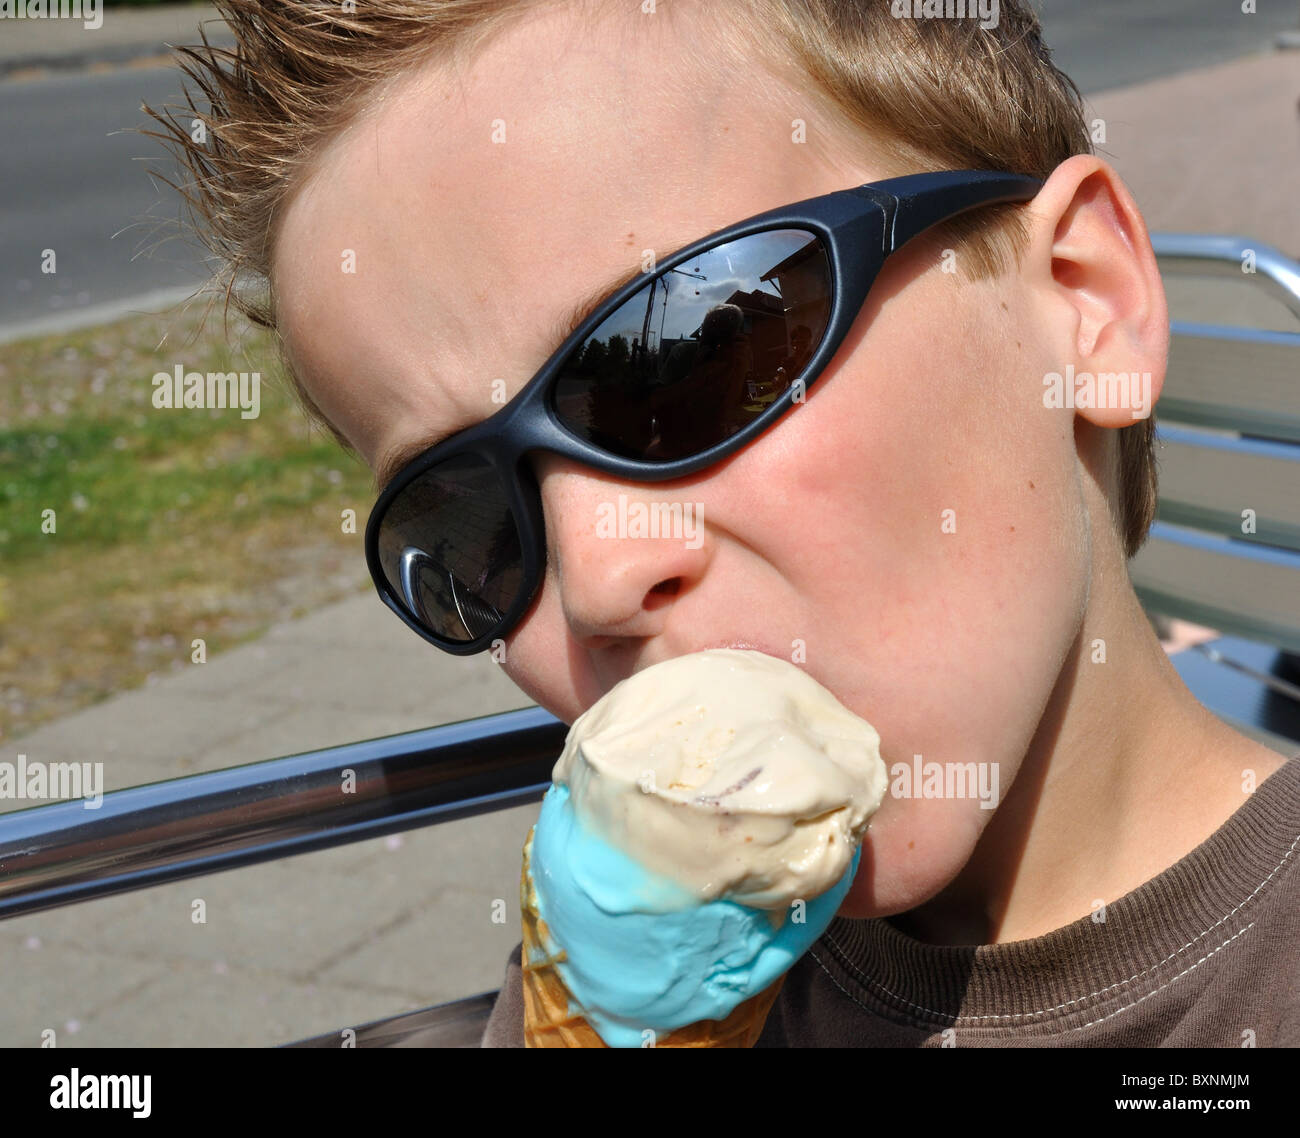 Young boy enjoying ice cream Stock Photo